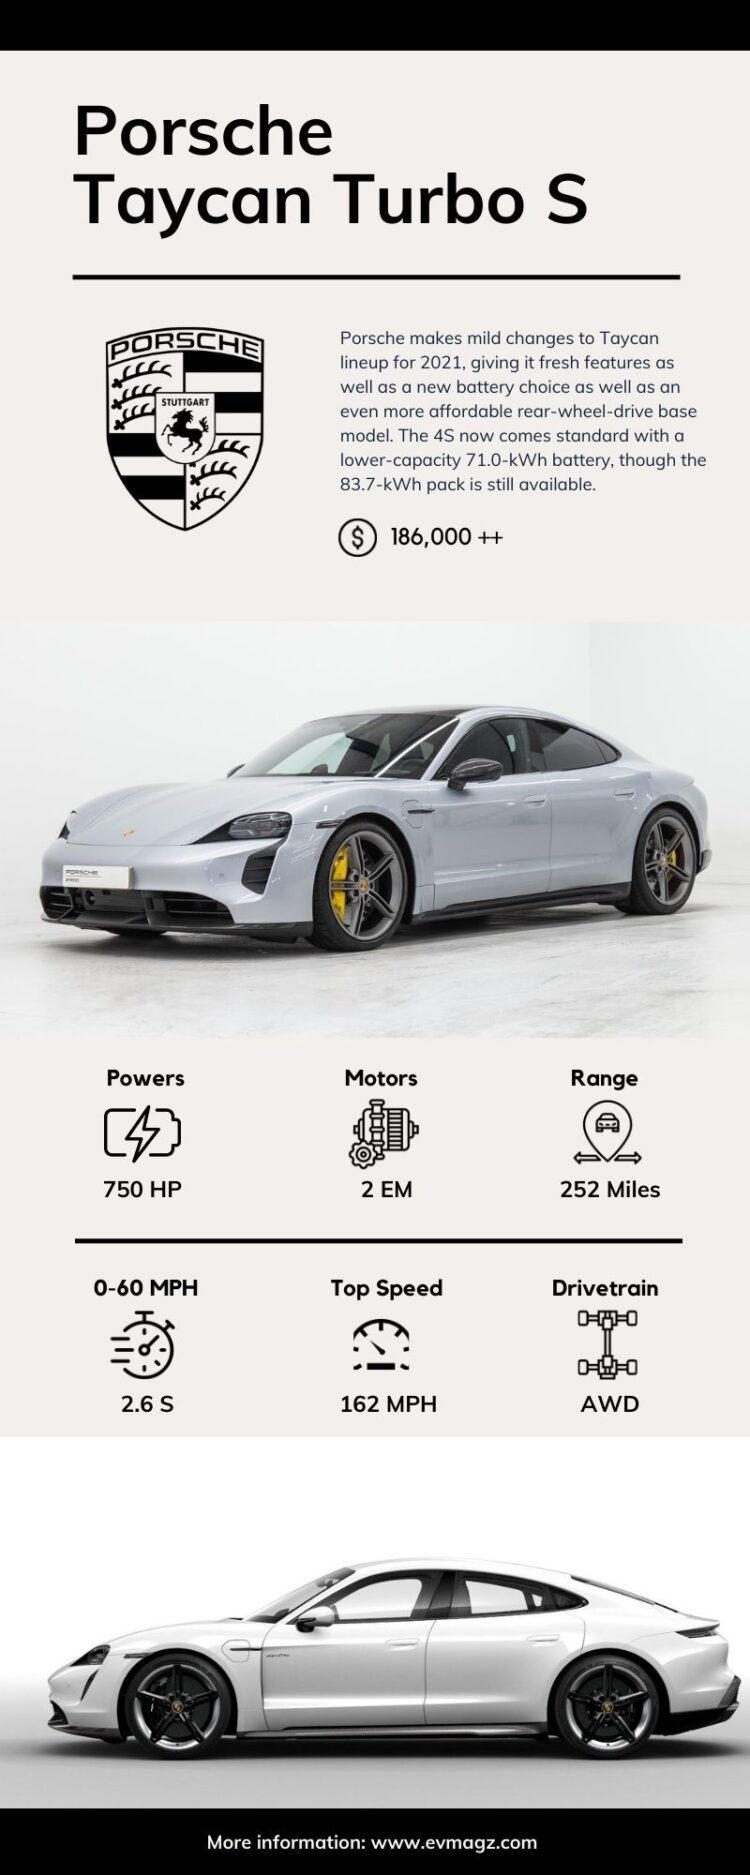 Porsche Taycan Turbo S Specification